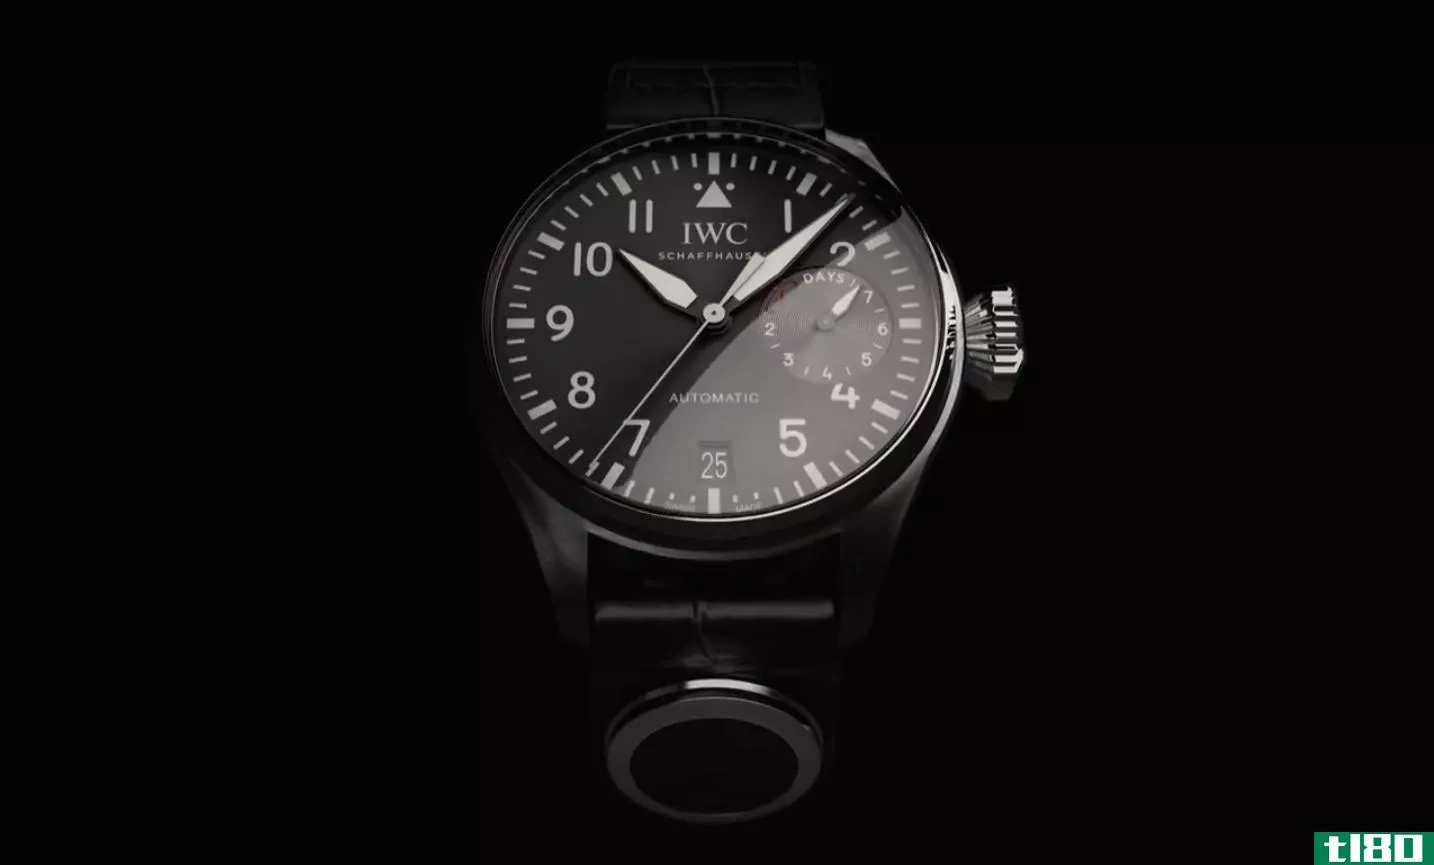 iwc沙夫豪森公司在你价值15000美元的手表表带上安装了一个健身跟踪器